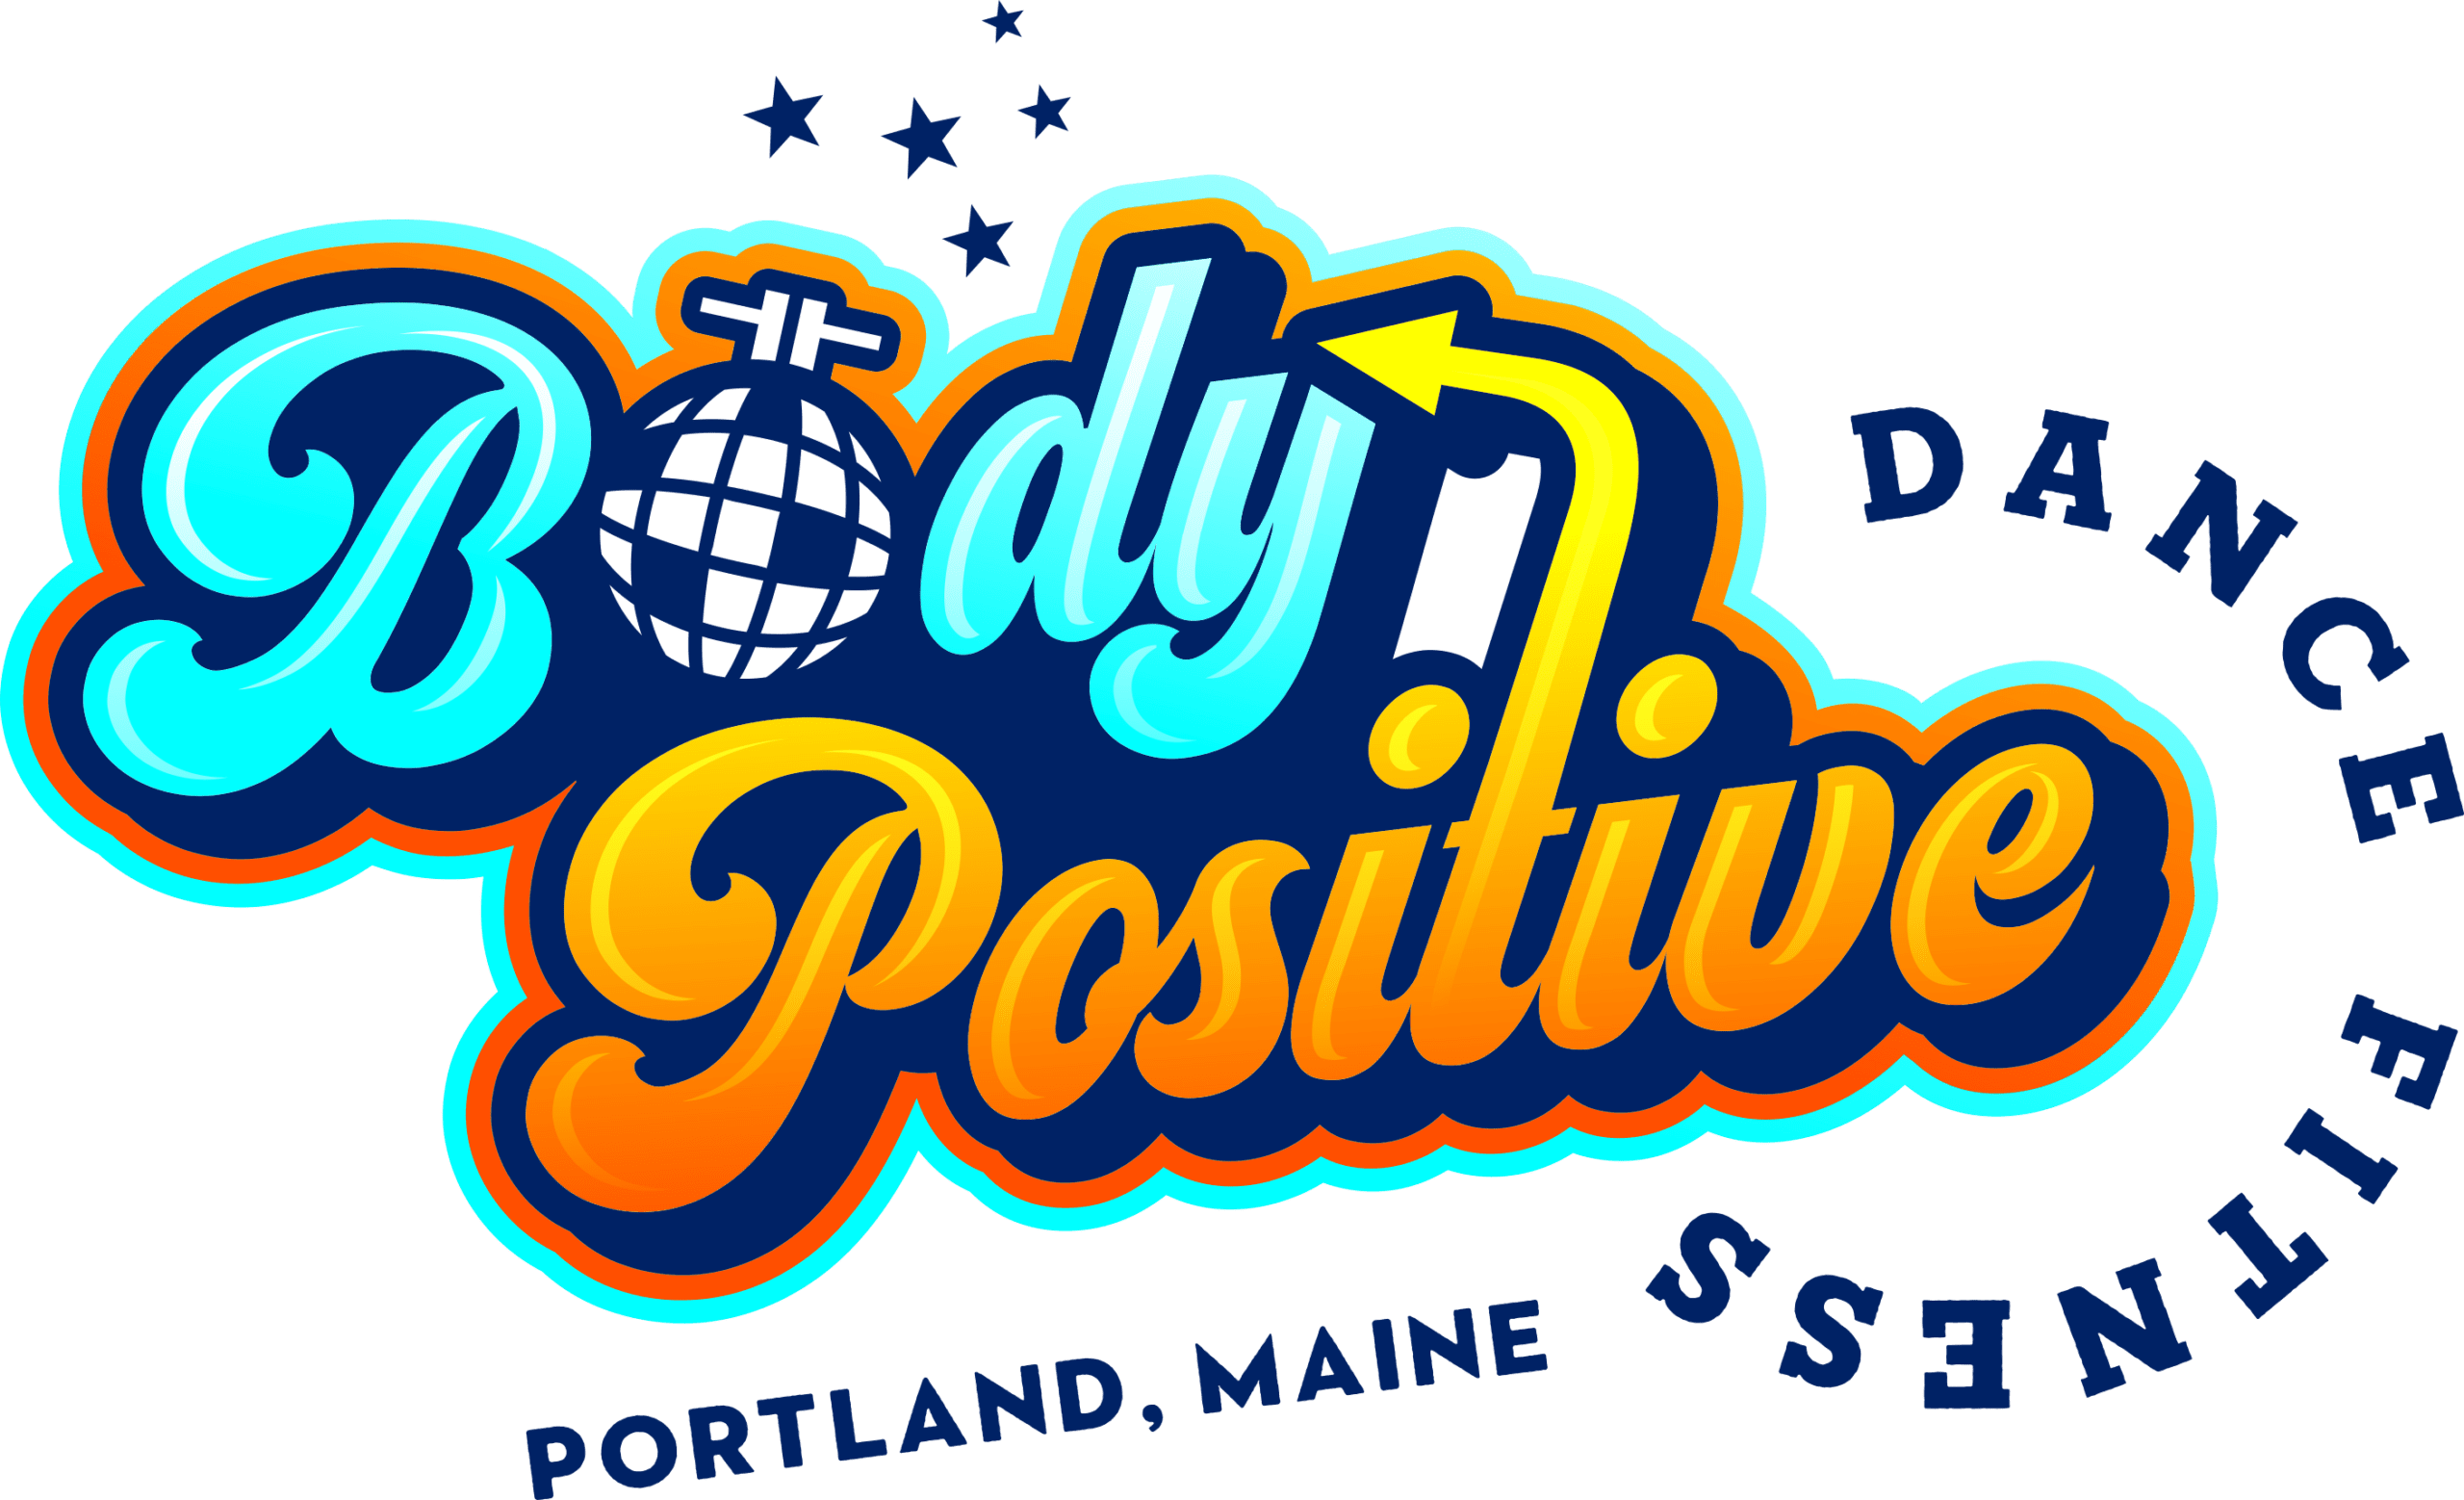 Body positive dance fitness - Local Economy